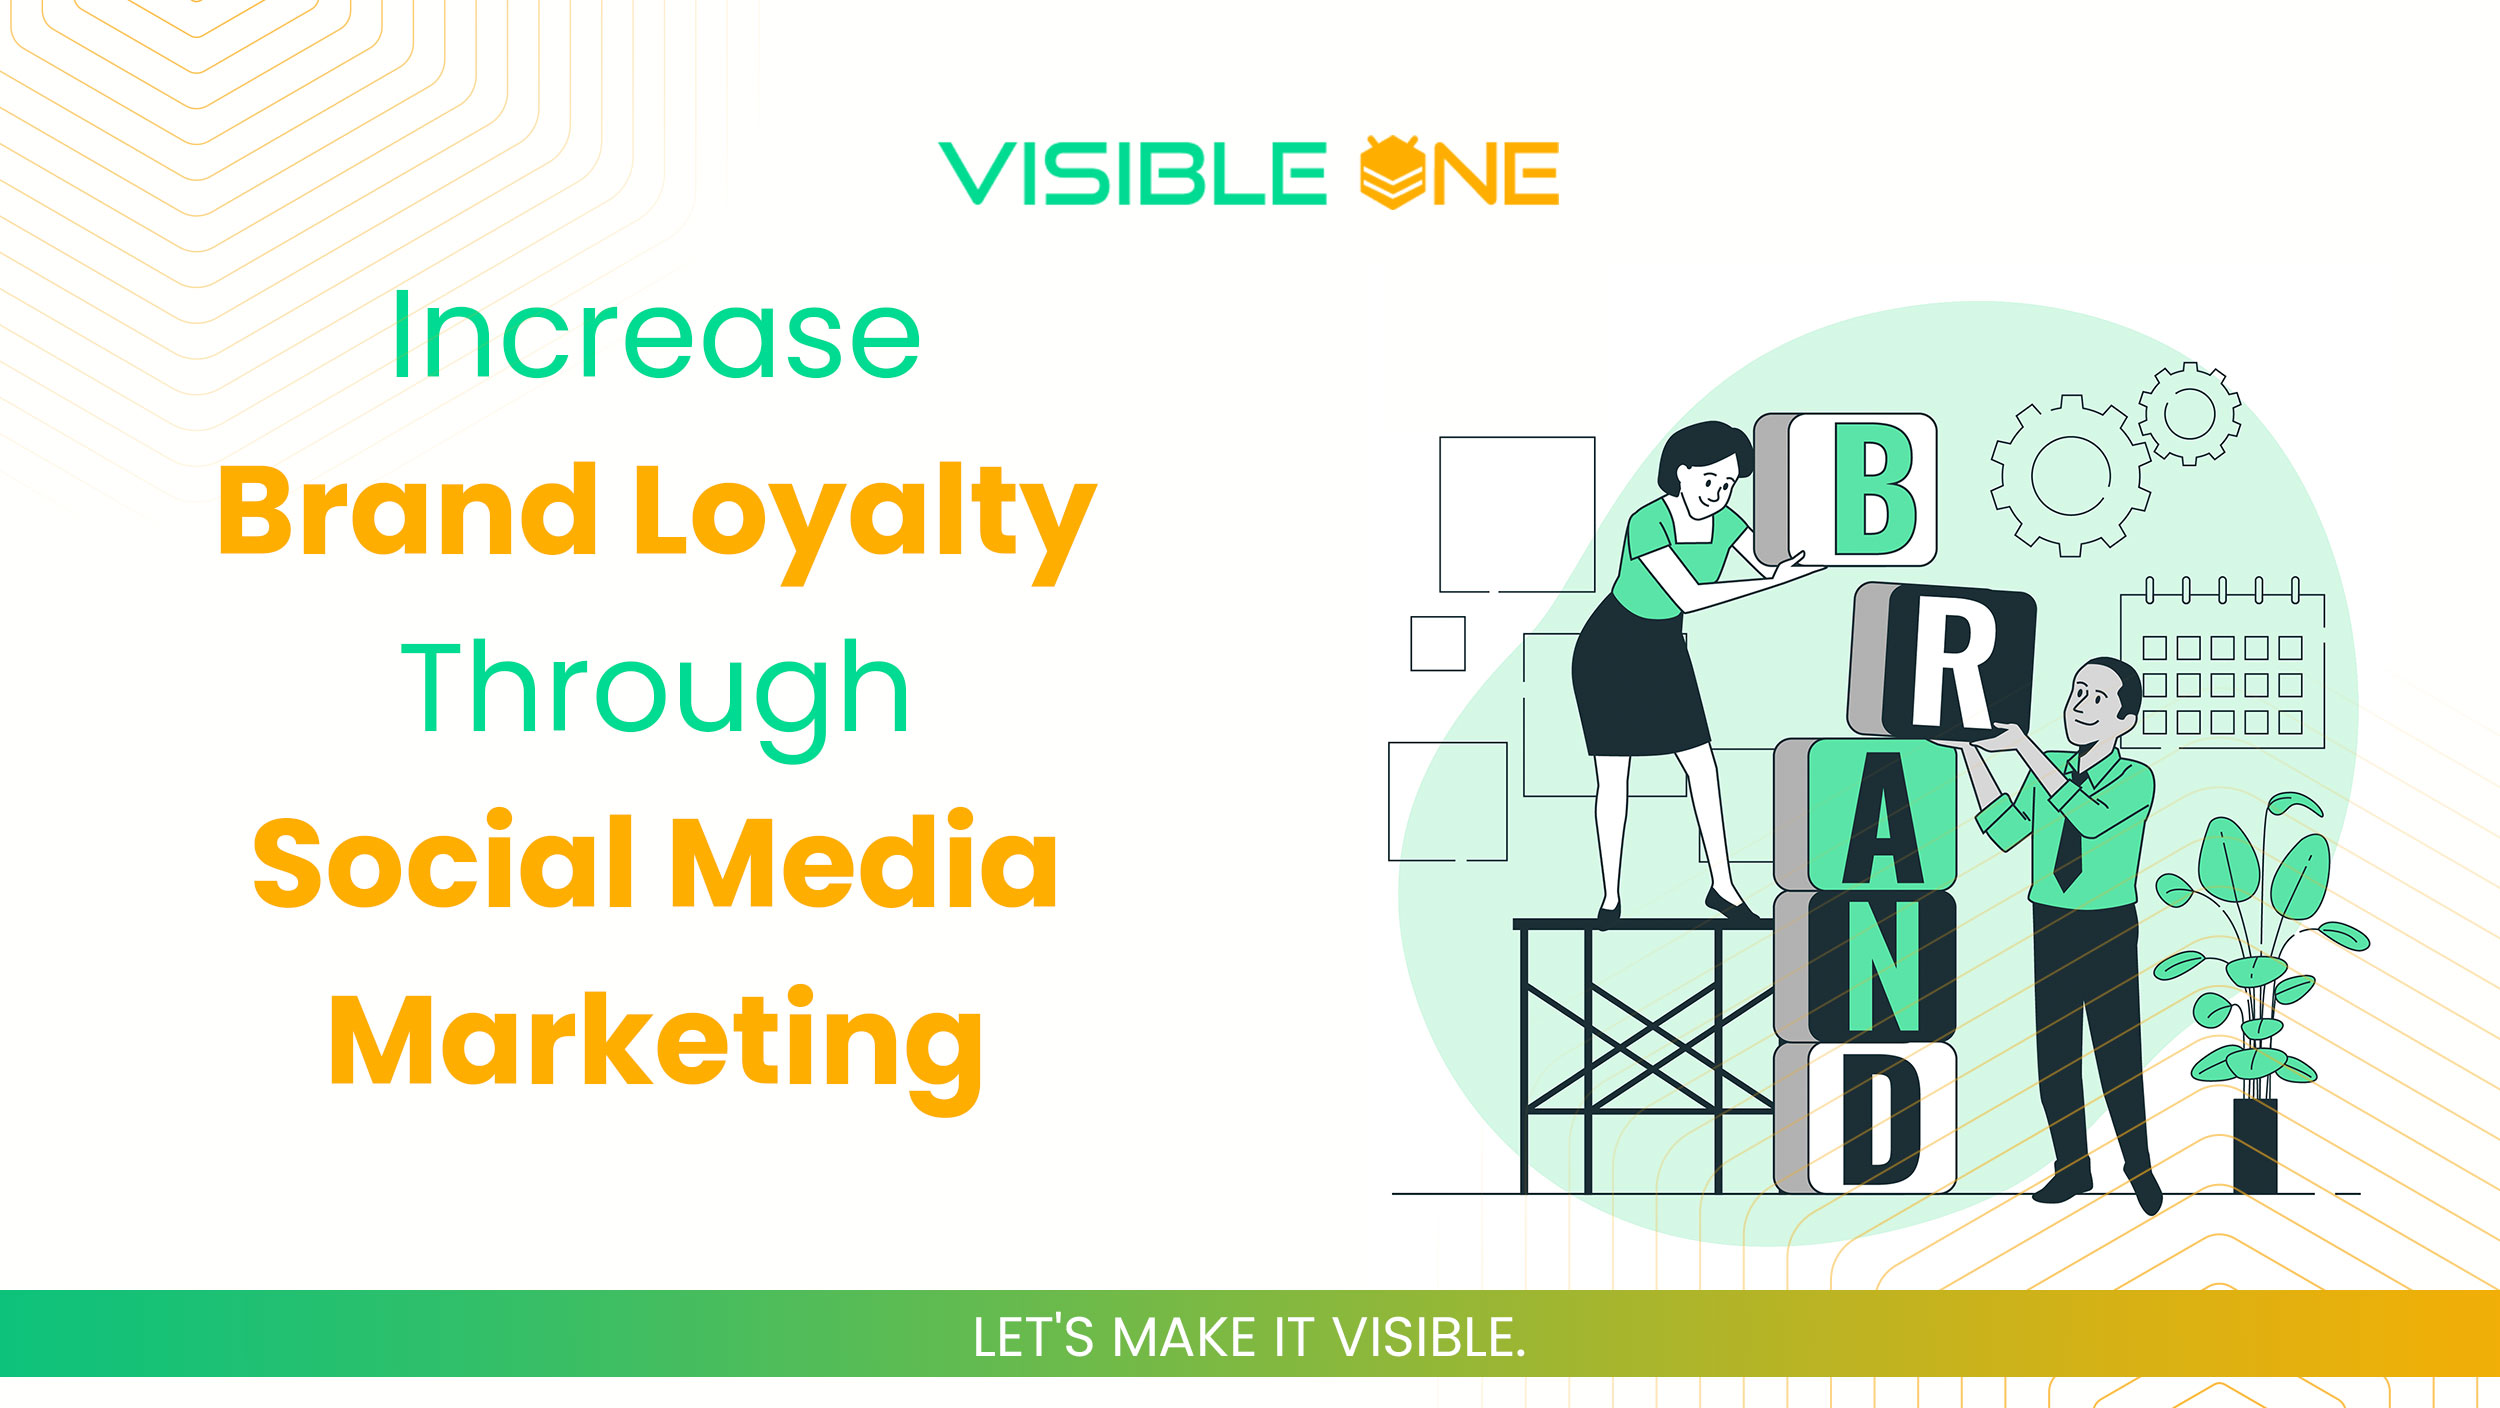 Increase Brand Loyalty Through Social Media Marketing